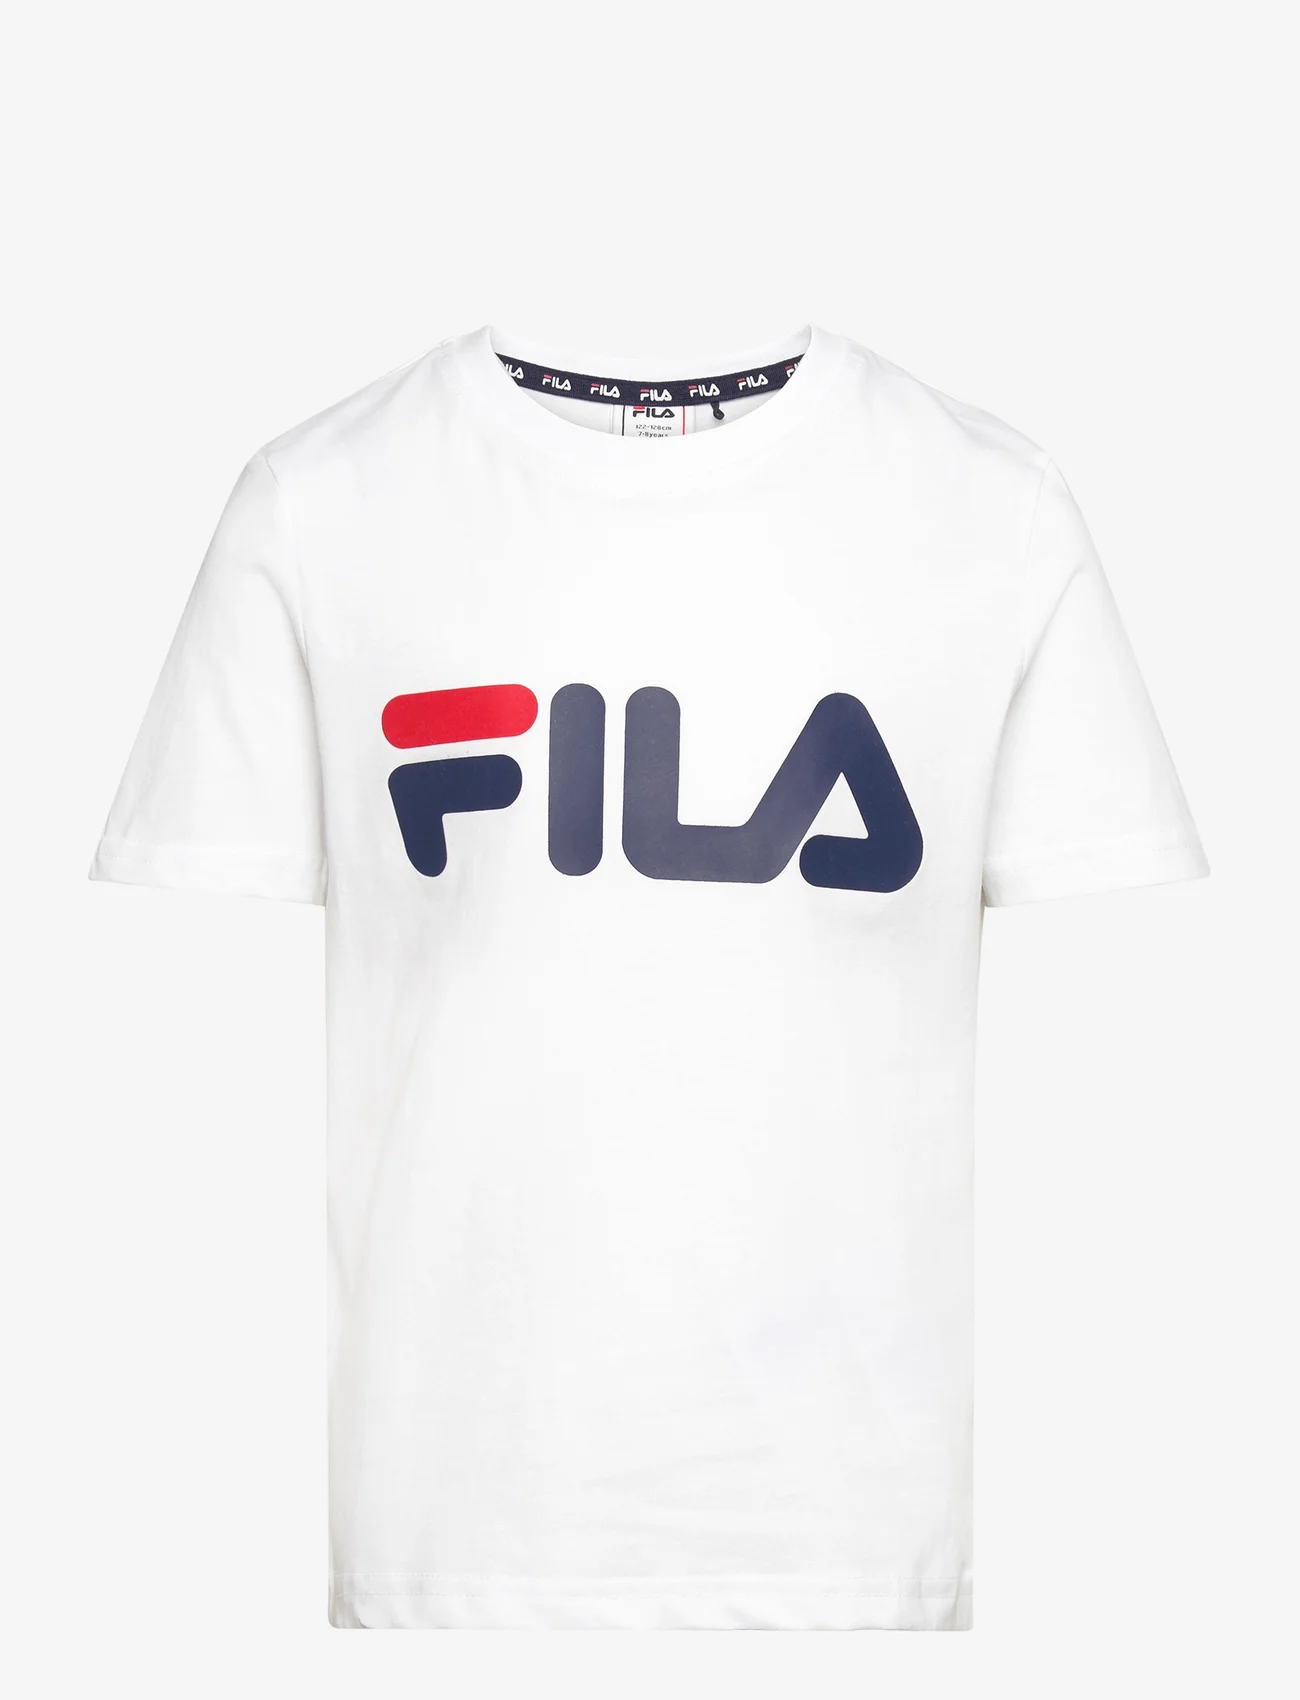 FILA - BAIA MARE classic logo tee - kurzärmelig - bright white - 0